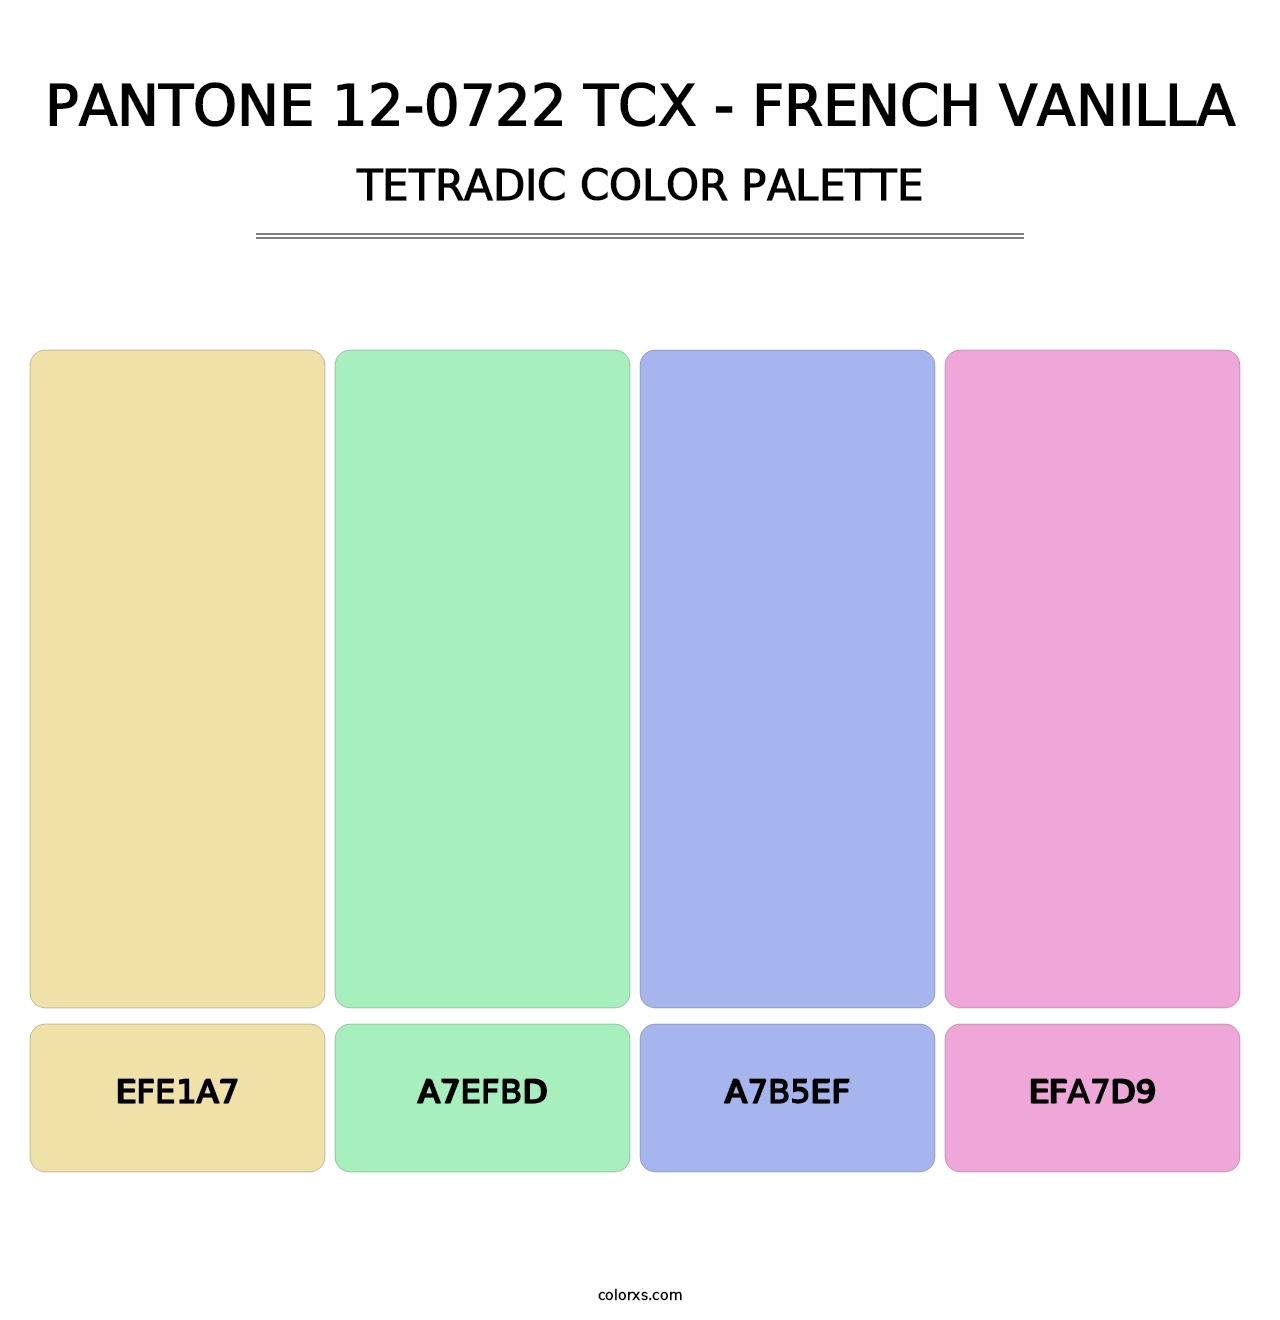 PANTONE 12-0722 TCX - French Vanilla - Tetradic Color Palette